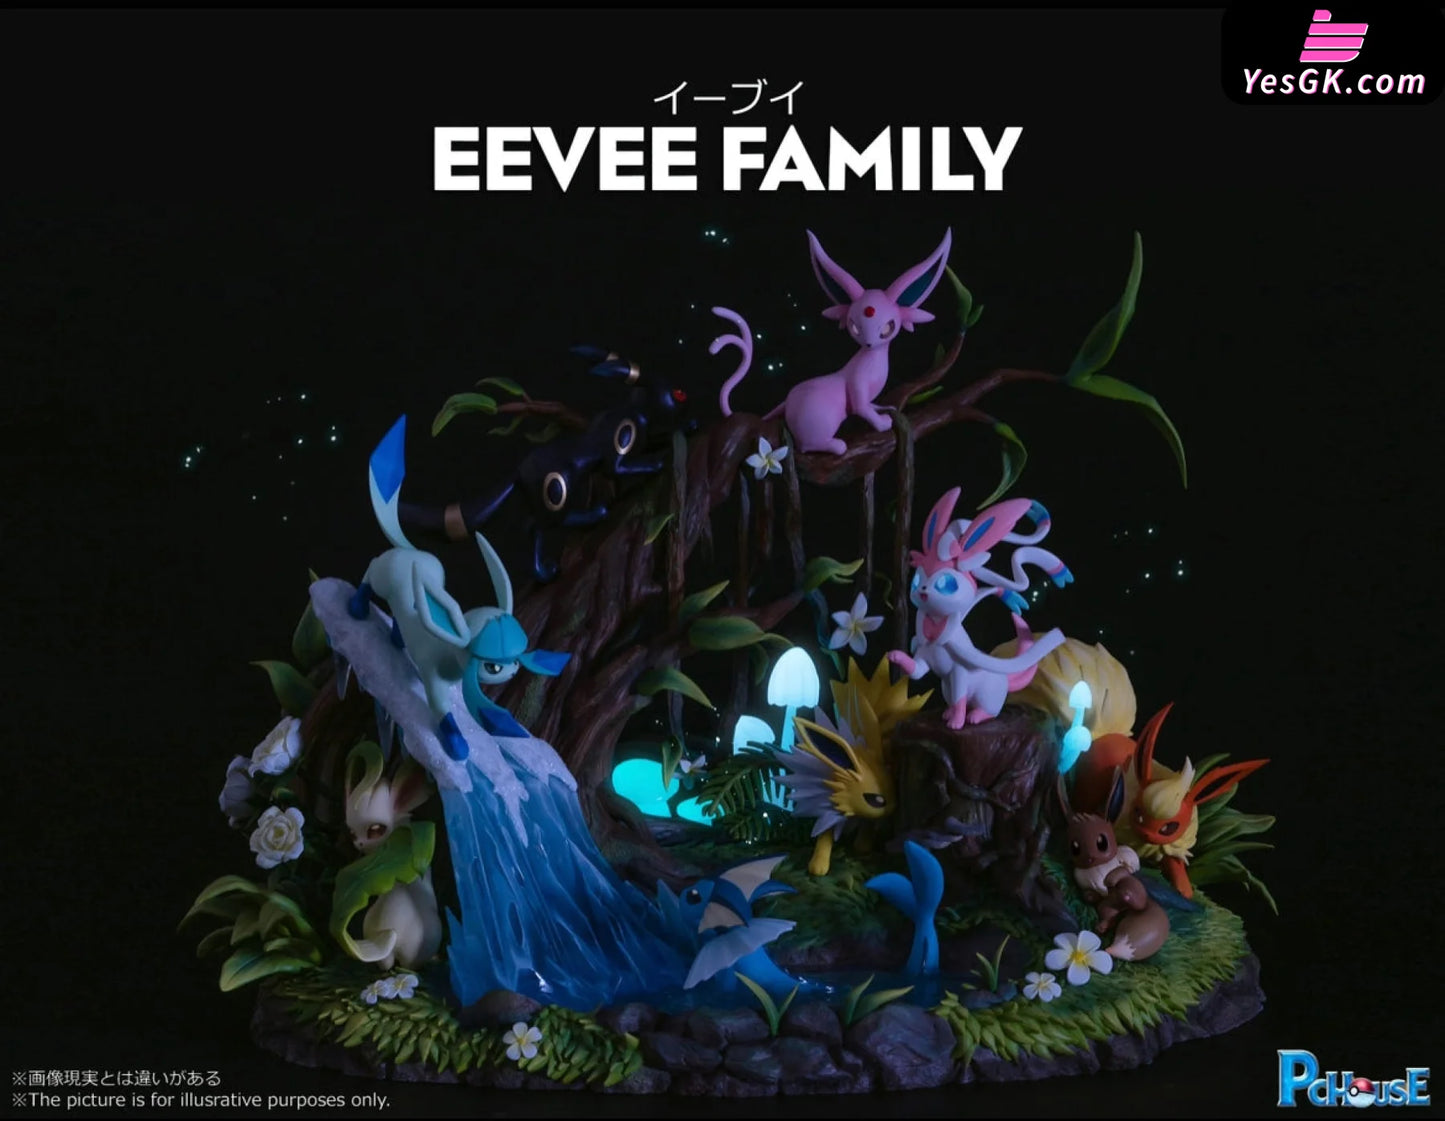 Pokémon Eevee Family Resin Statue - Pc House Studio [In-Stock] Full Payment